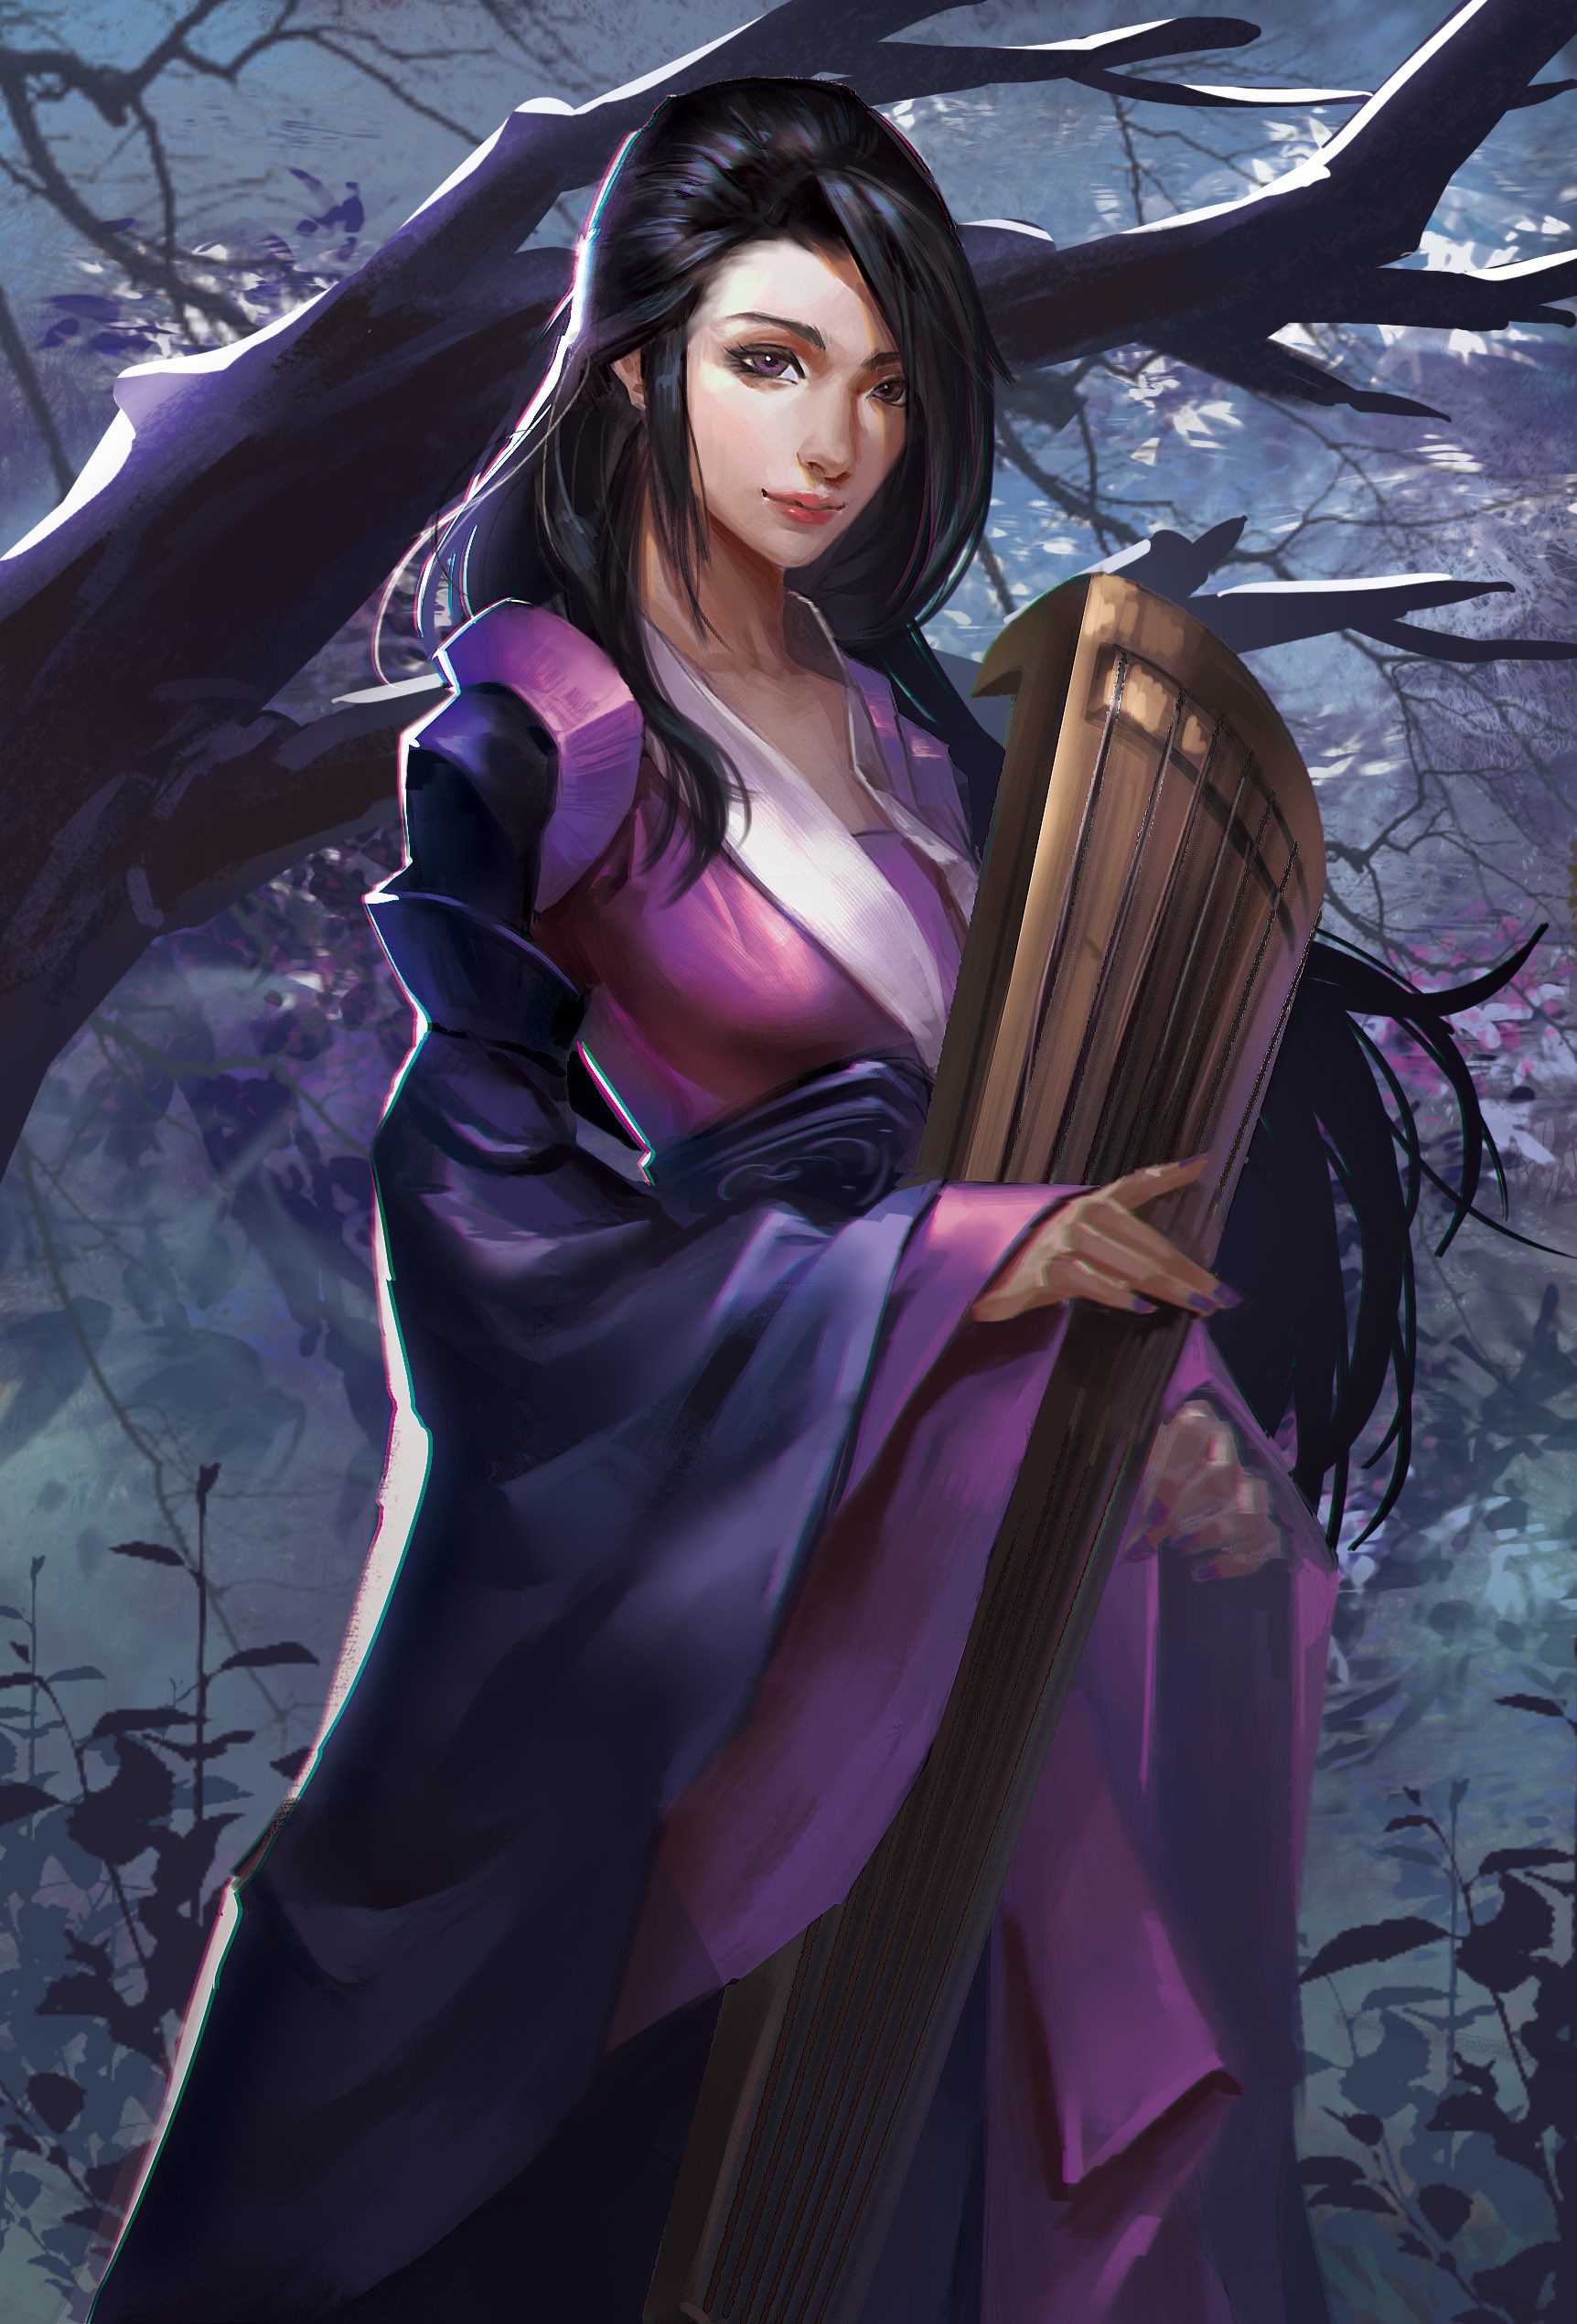 General 1724x2541 fantasy art fantasy girl dark hair artwork women black hair musical instrument